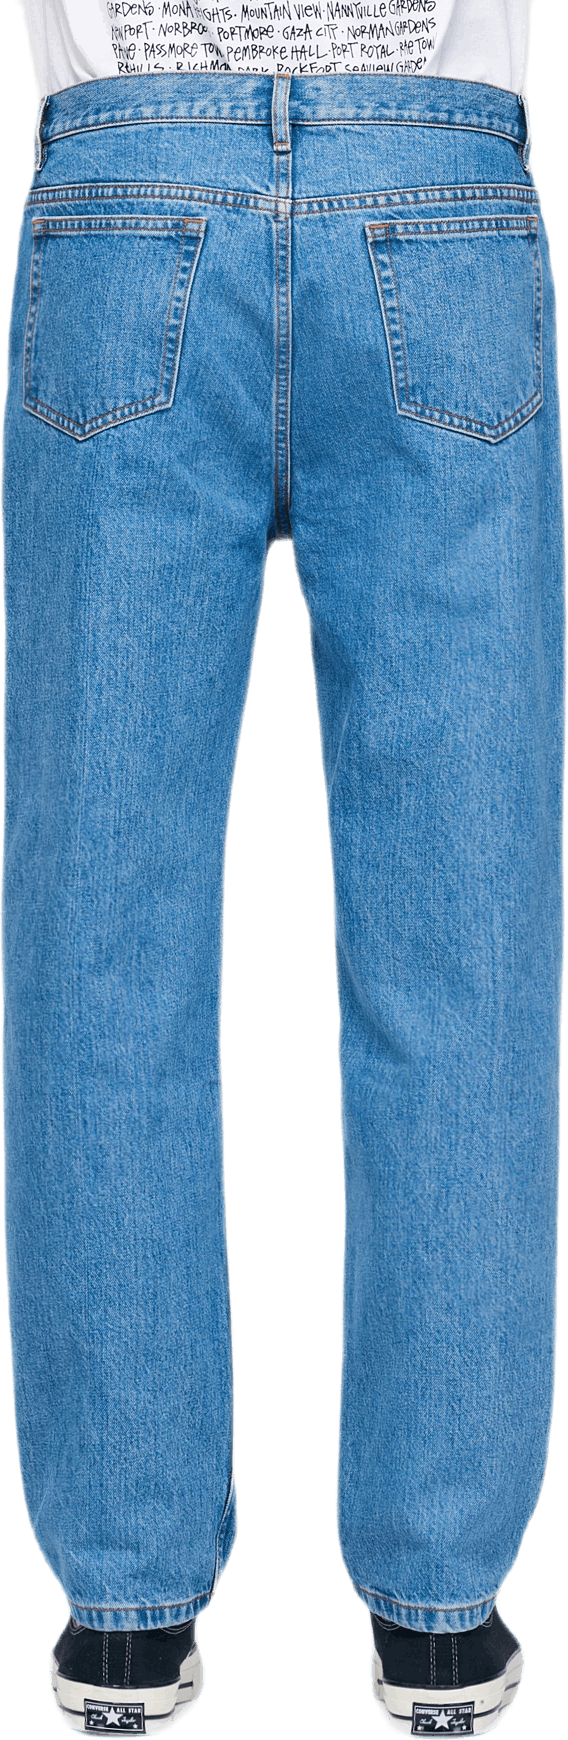 Martin Jeans Blue